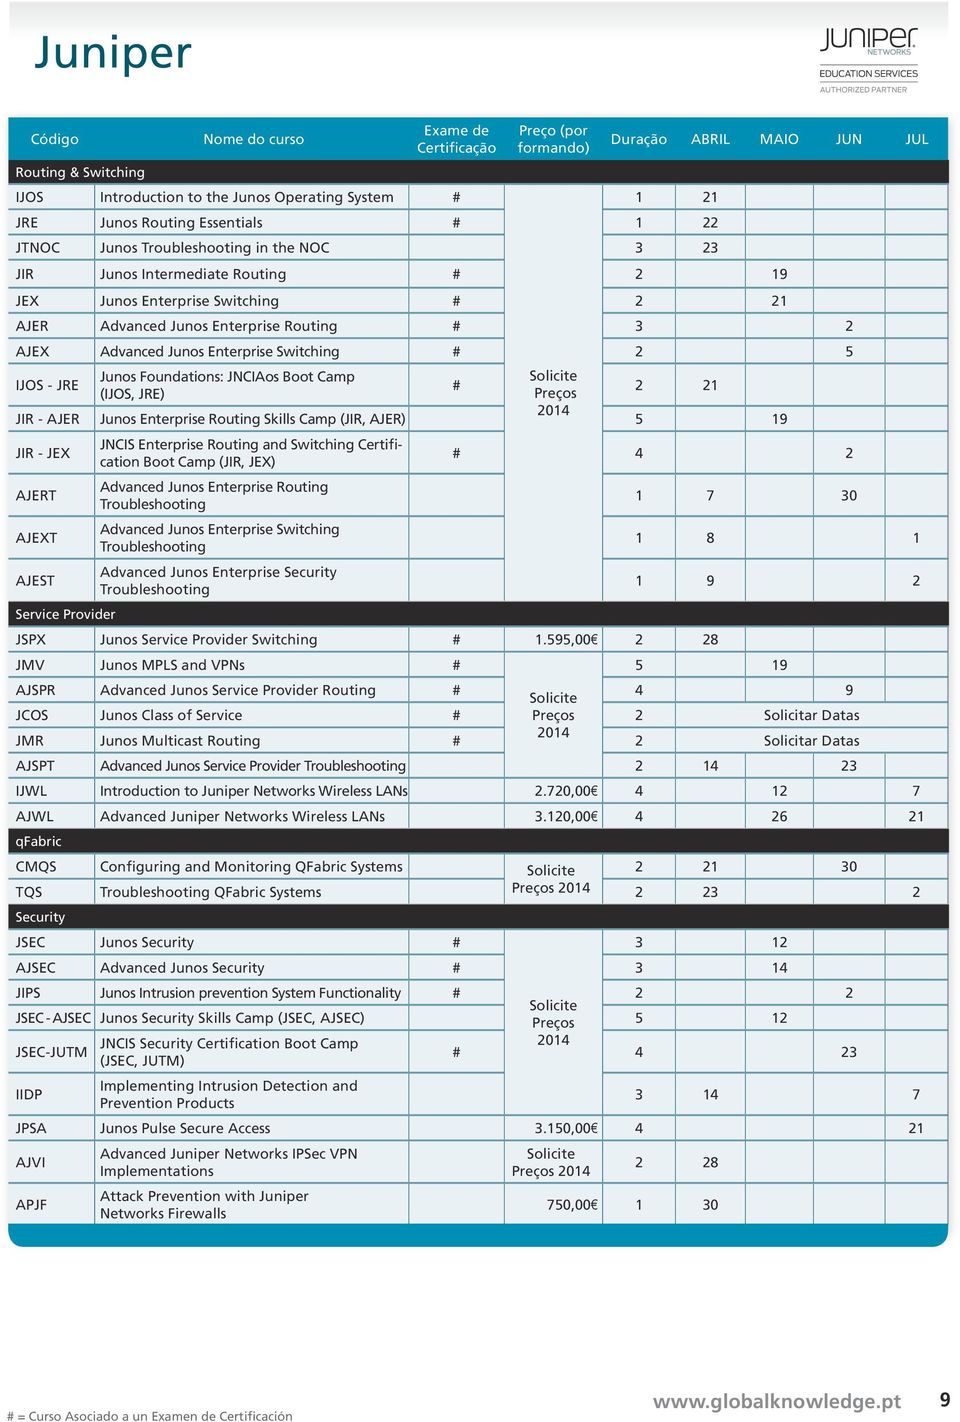 JRE) Preços 2 21 JIR - AJER Junos Enterprise Routing Skills Camp (JIR, AJER) 2014 5 19 JIR - JEX JNCIS Enterprise Routing and Switching Certification Boot Camp (JIR, JEX) # 4 2 AJERT Advanced Junos